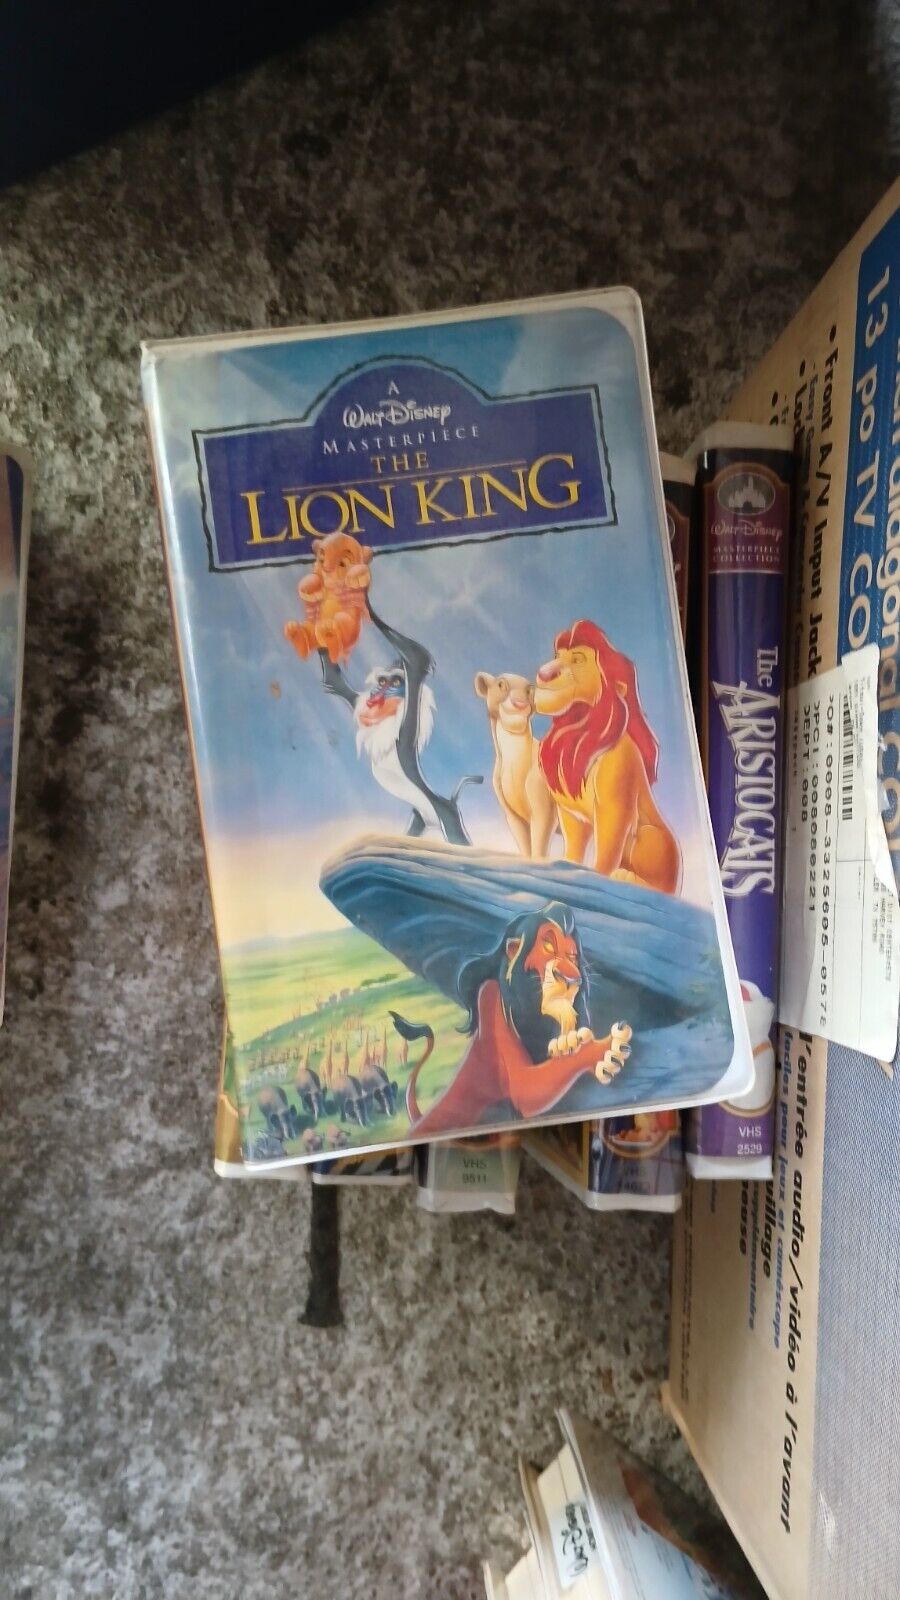 ORIGINAL  RARE  THE LION KING VHS (WALT DISNEY MASTERPIECE COLLECTION) 1994